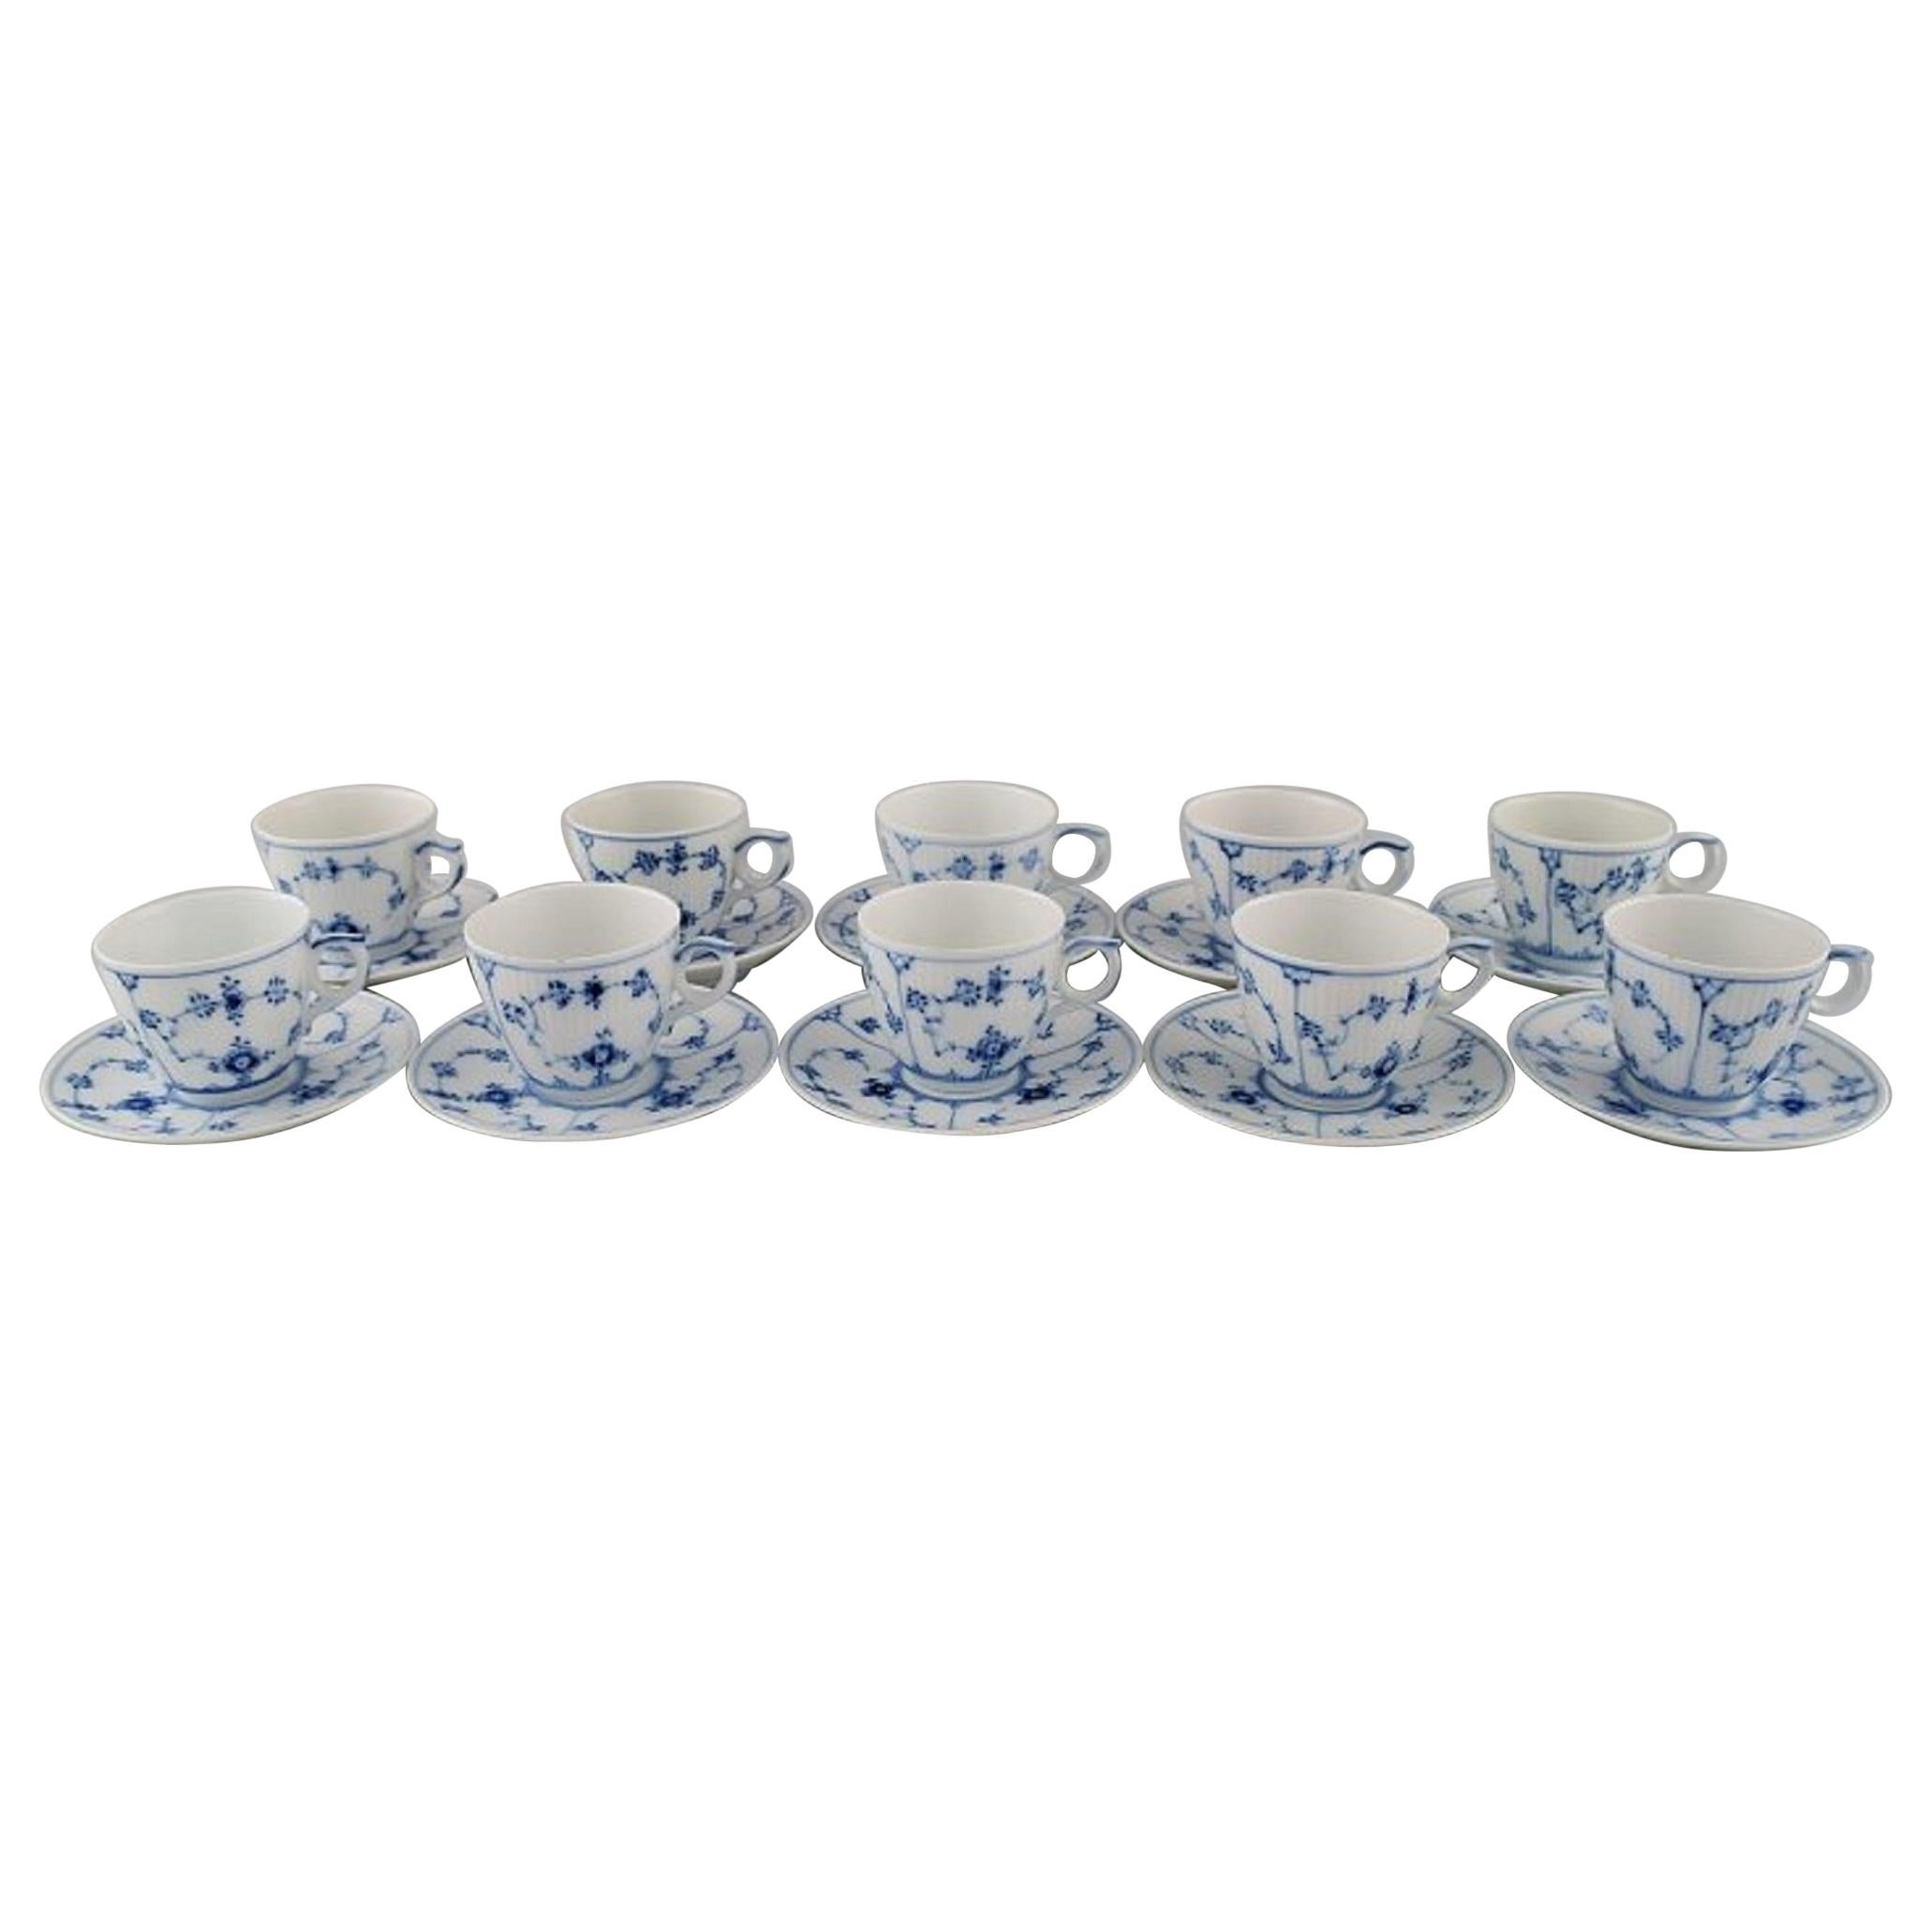 Set of 10 Royal Copenhagen Blue Fluted Plain Espresso/ Mocha Cups with Saucers